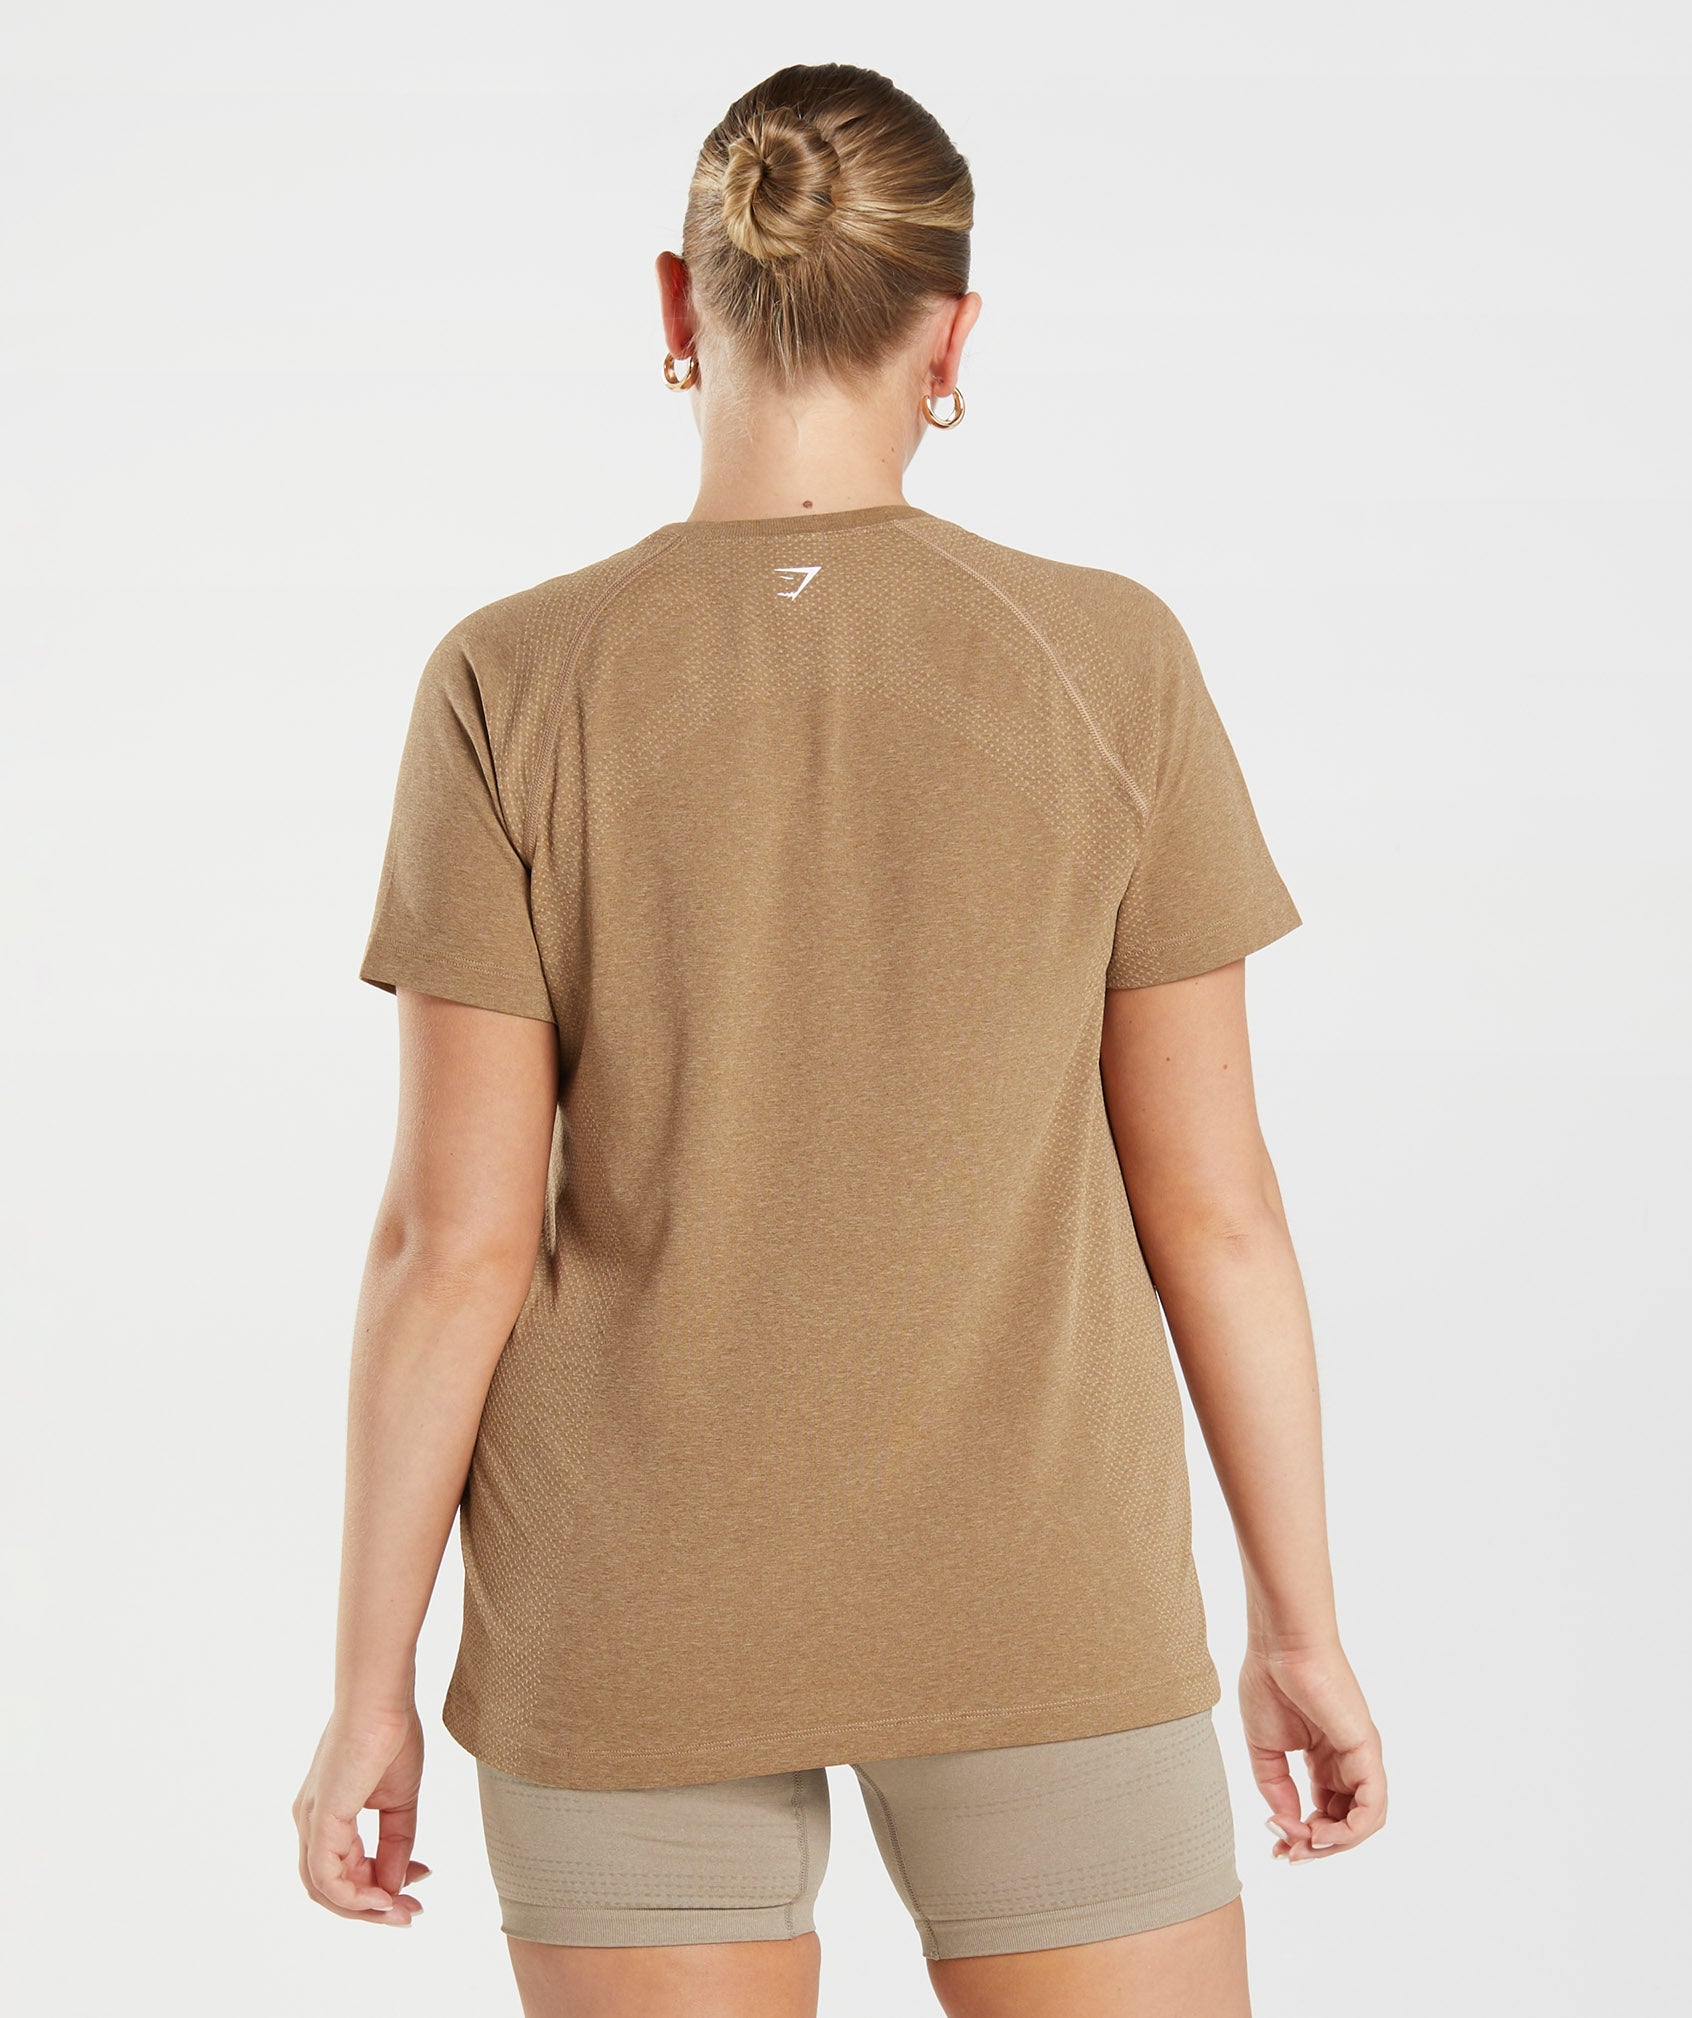 Vital Seamless 2.0 Light T-Shirt  in Fawn Marl - view 2